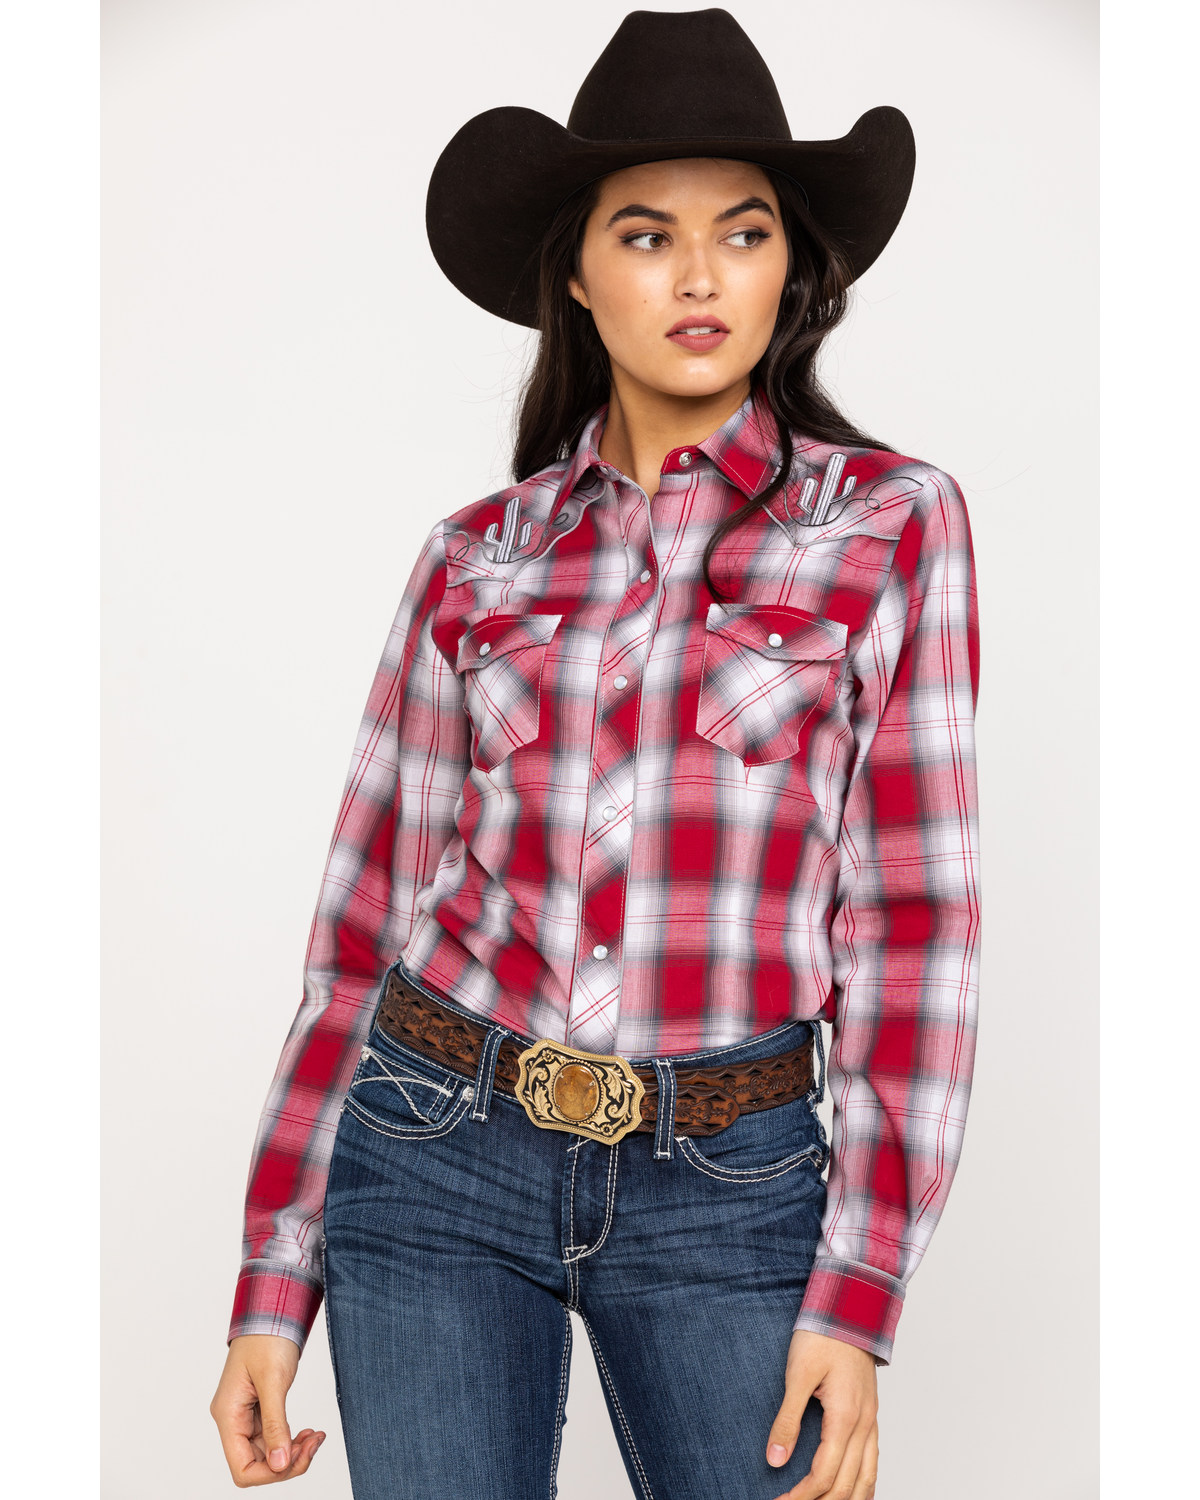 womens red western shirt